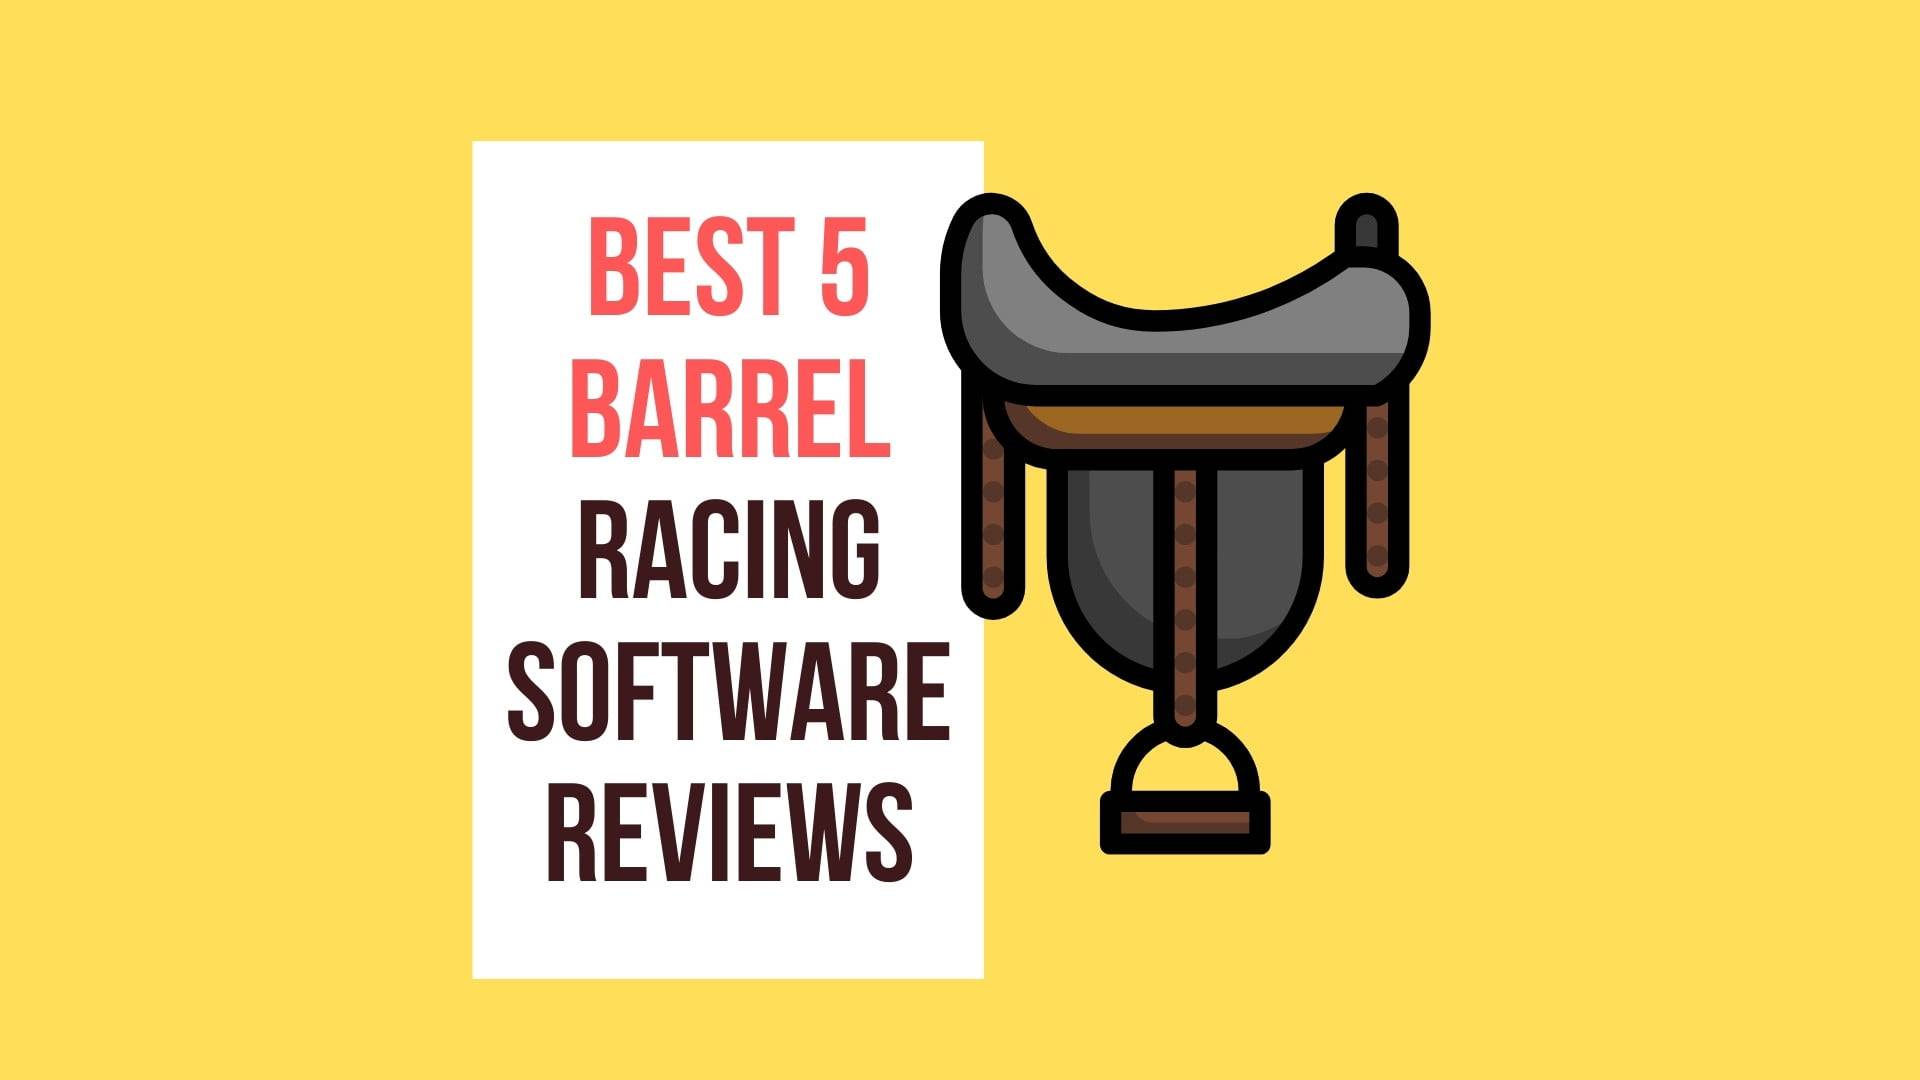 Barrel Racing Software